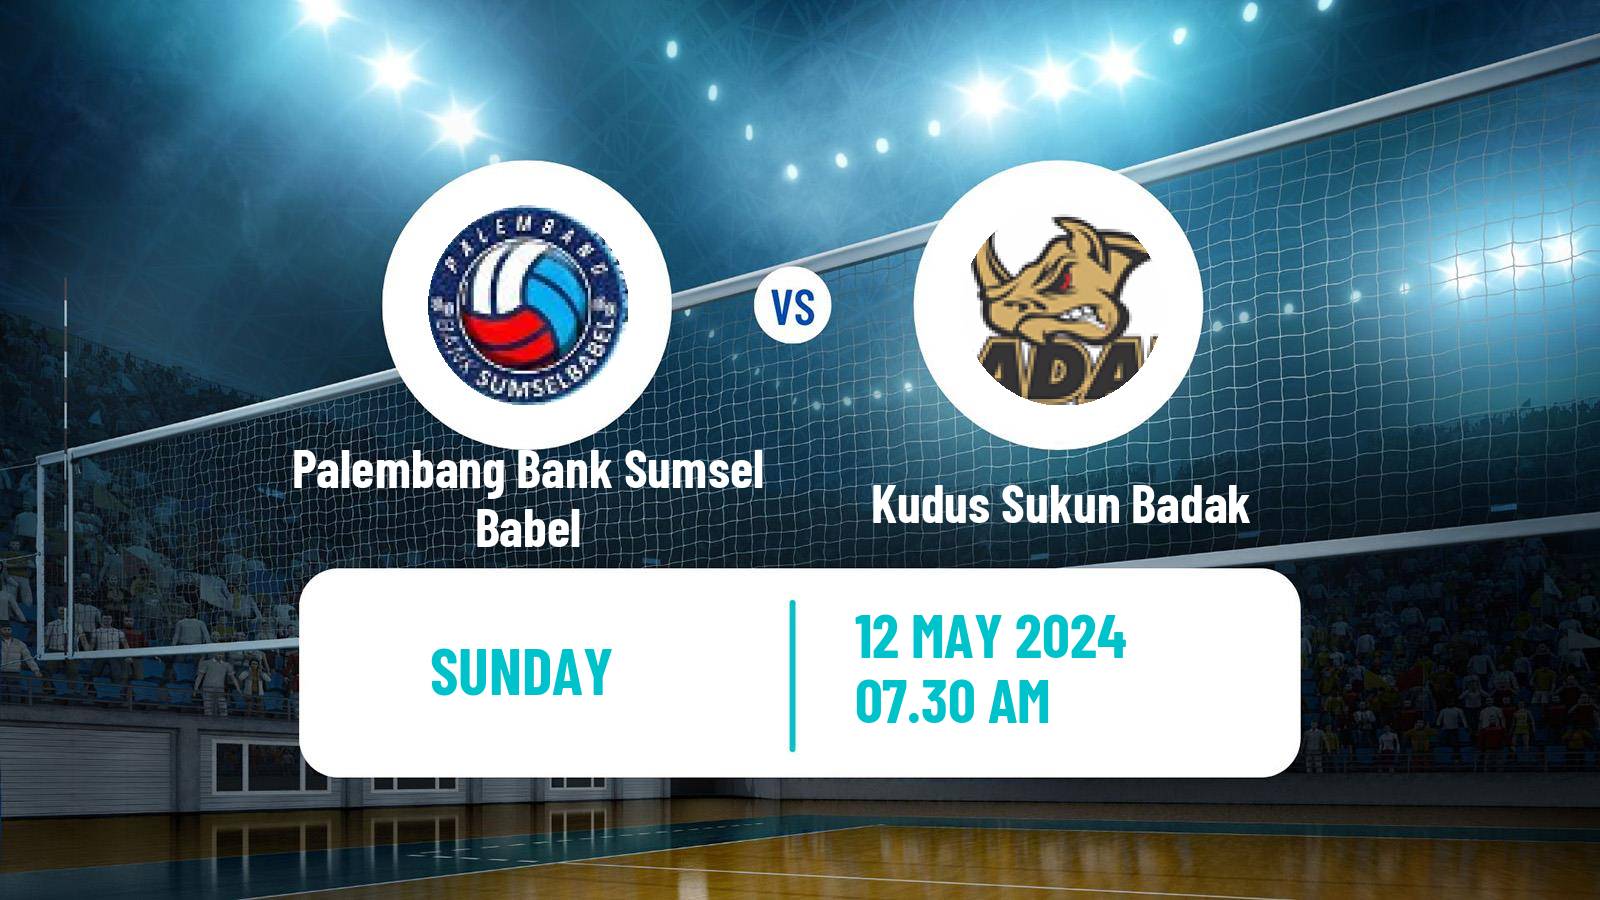 Volleyball Indonesian Proliga Volleyball Palembang Bank Sumsel Babel - Kudus Sukun Badak